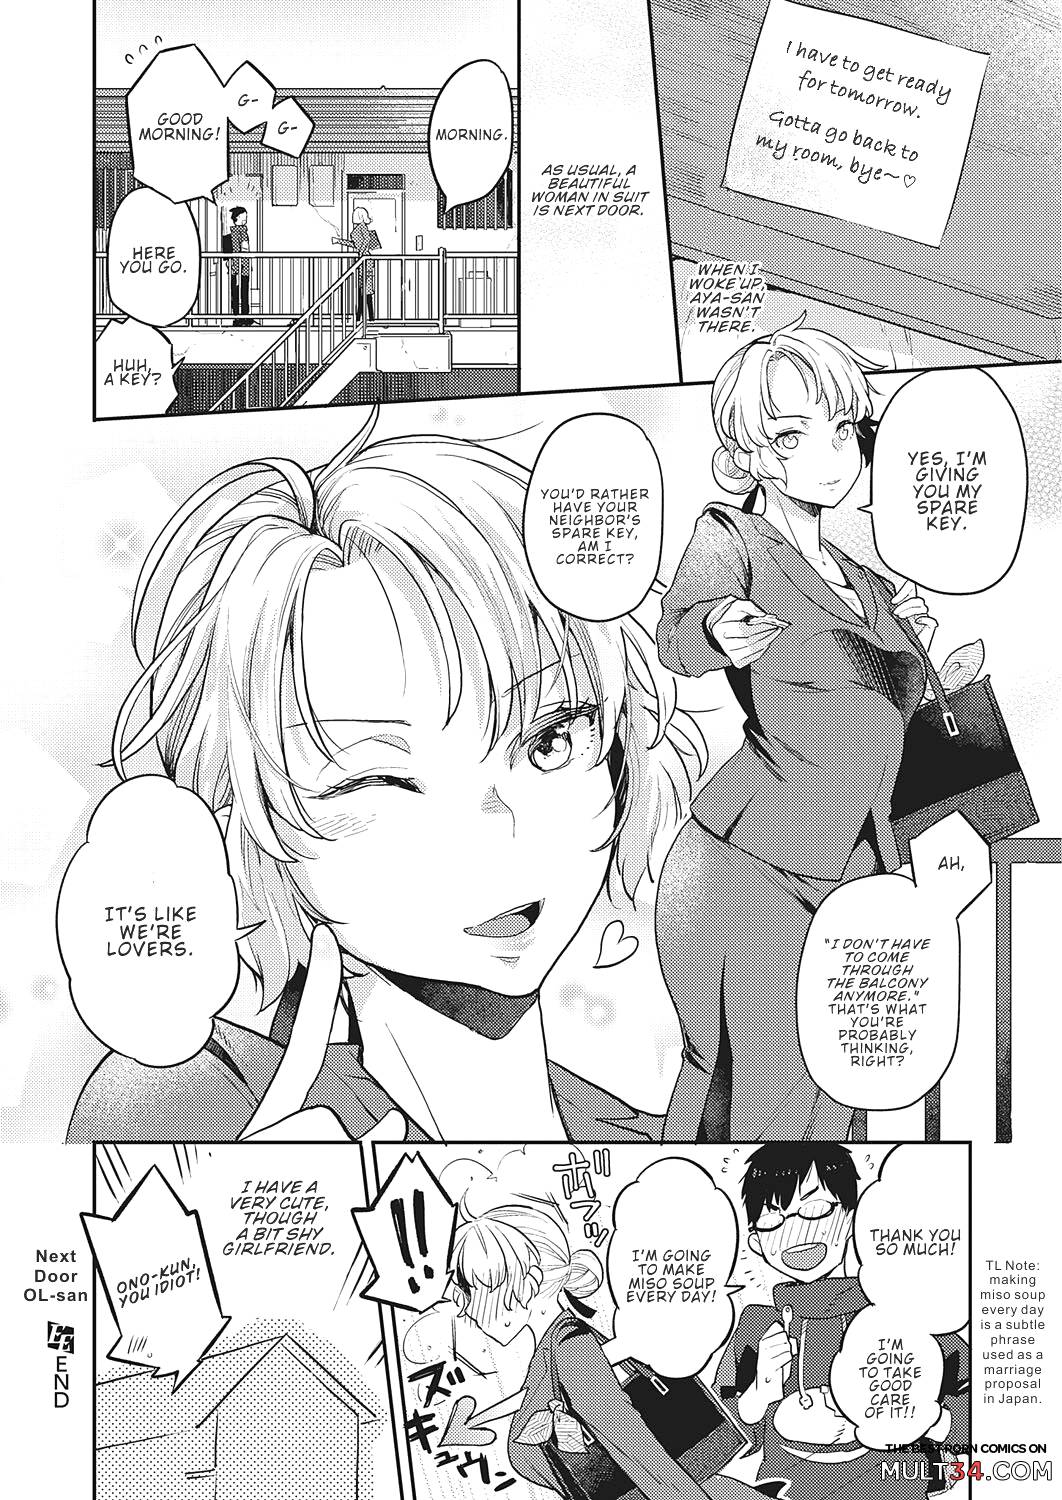 OL-san Next Door page 32